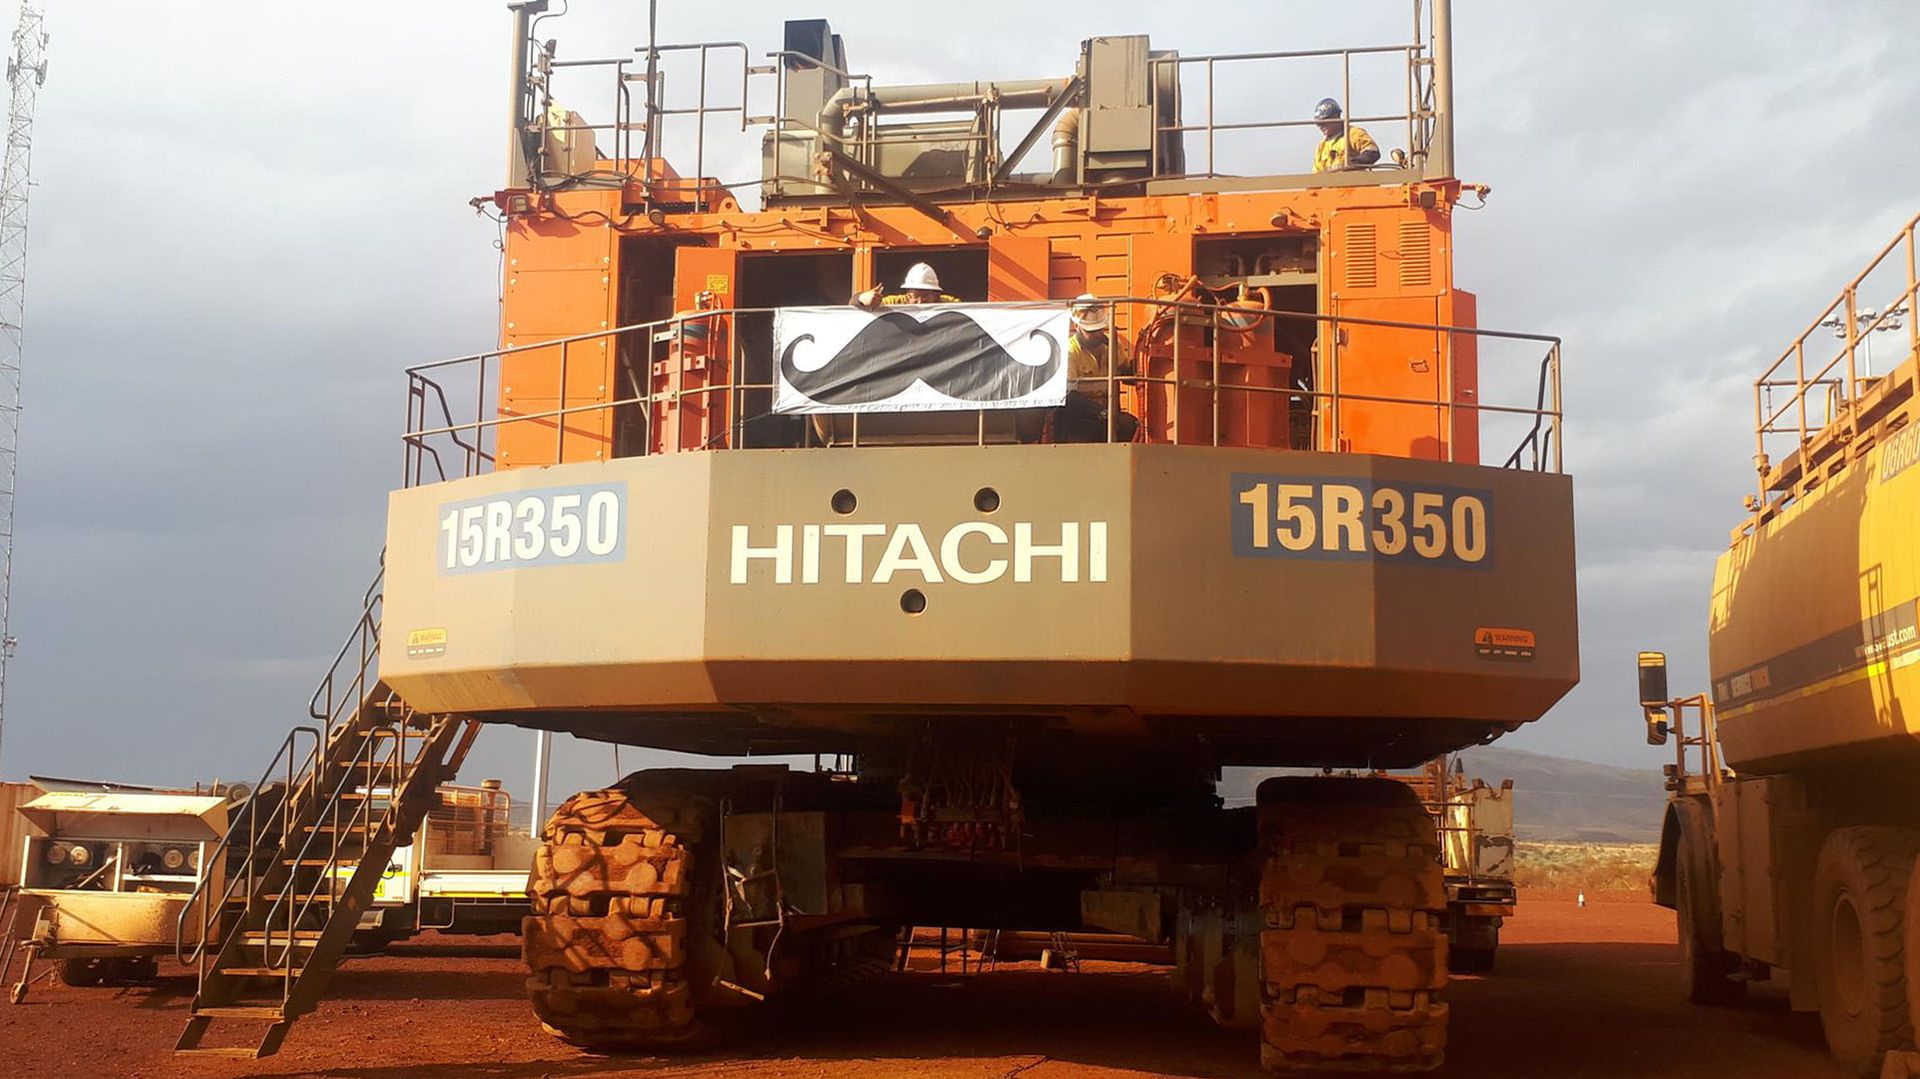 Photo of a heavy duty Hitachi earthmoving machine, adorned with a Movember moustache logo.